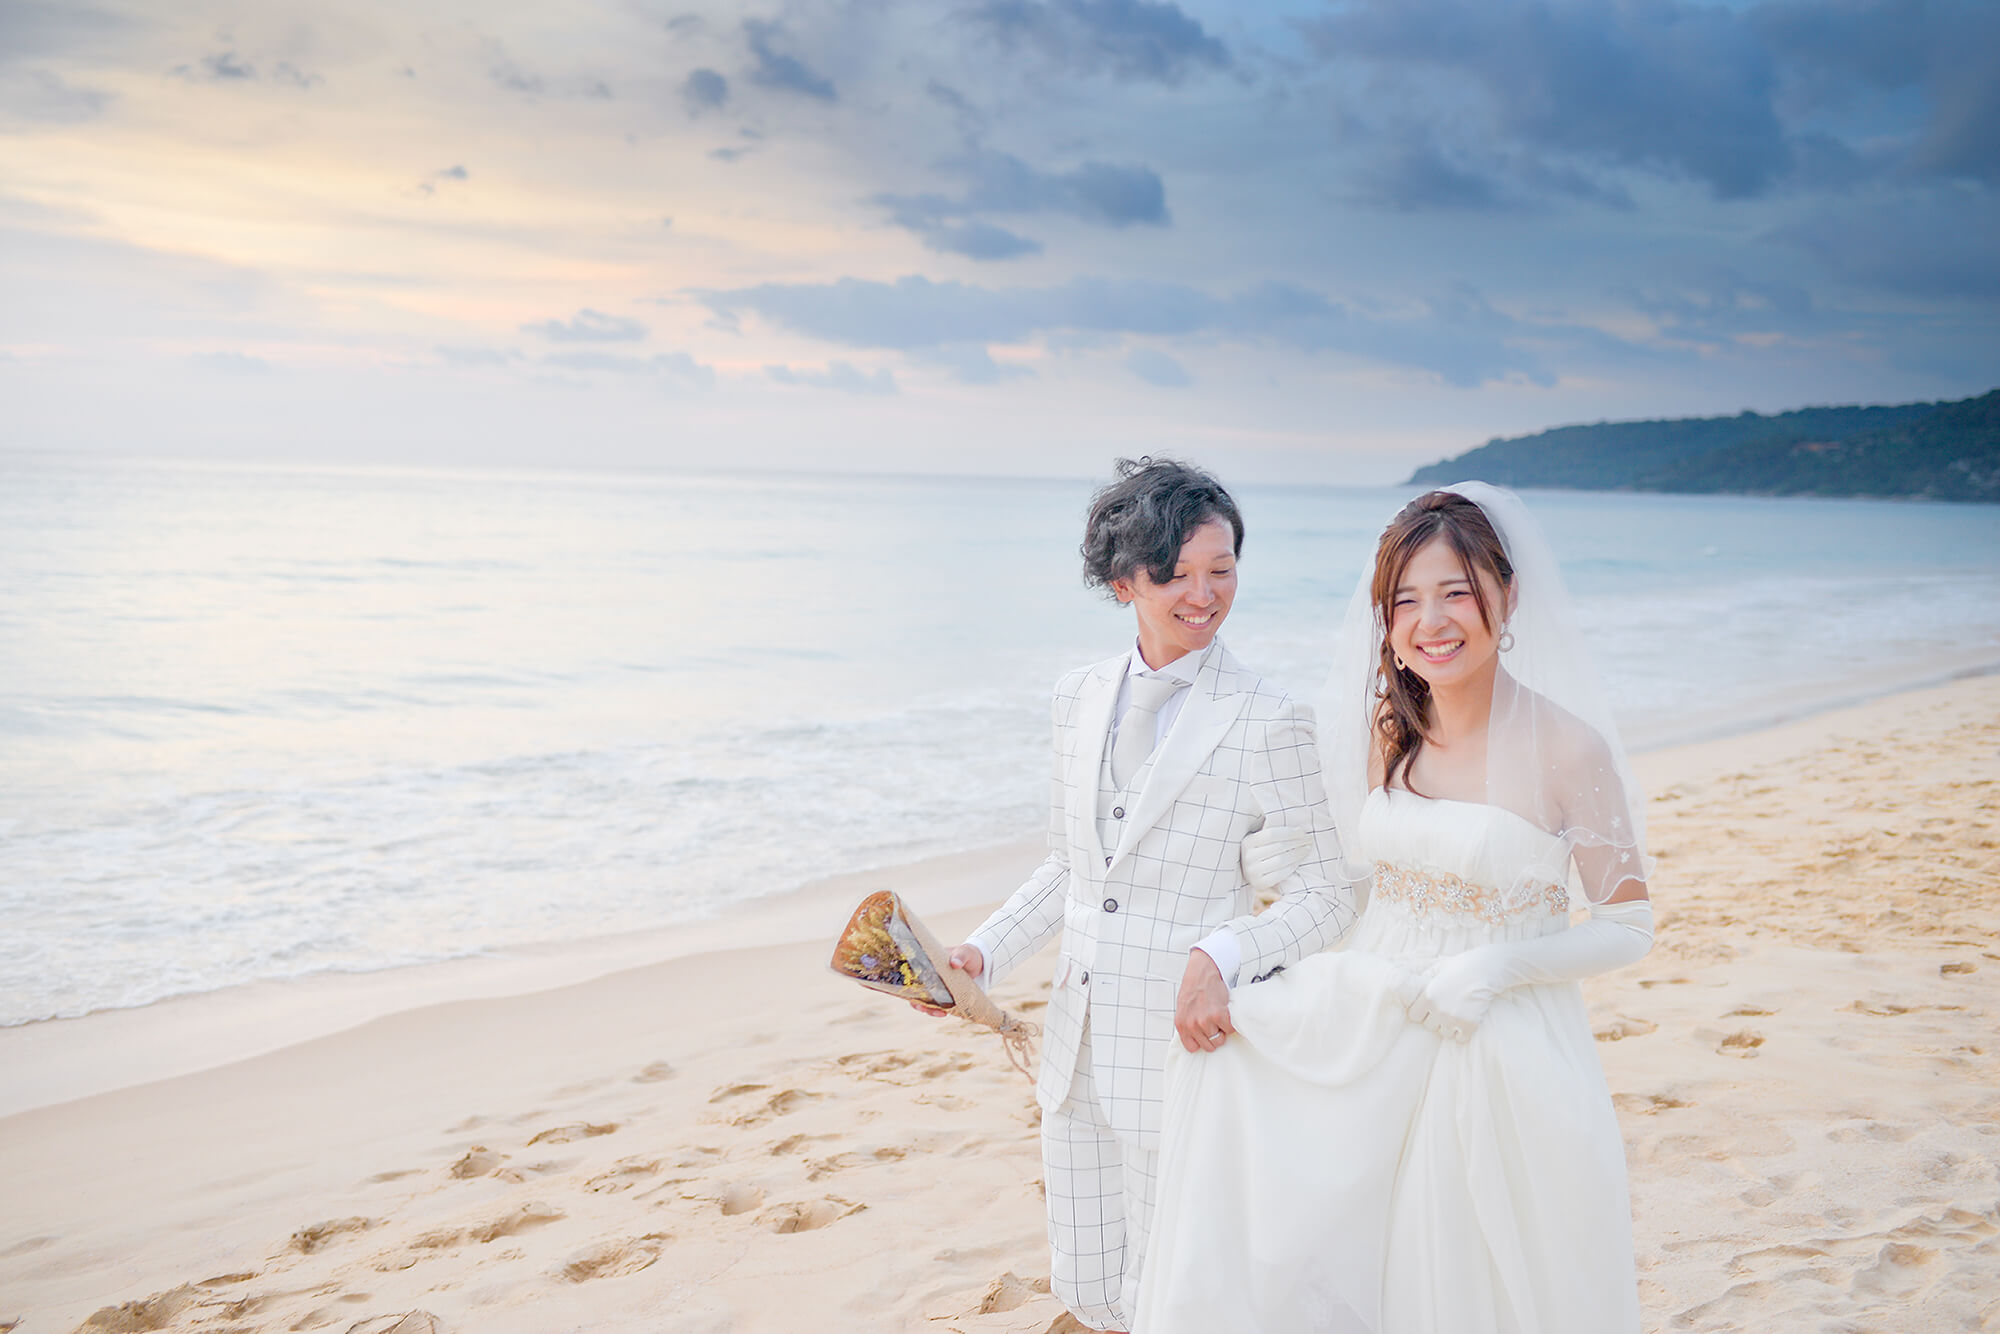 Phuket, Thailand Pre-Wedding Photoshoot